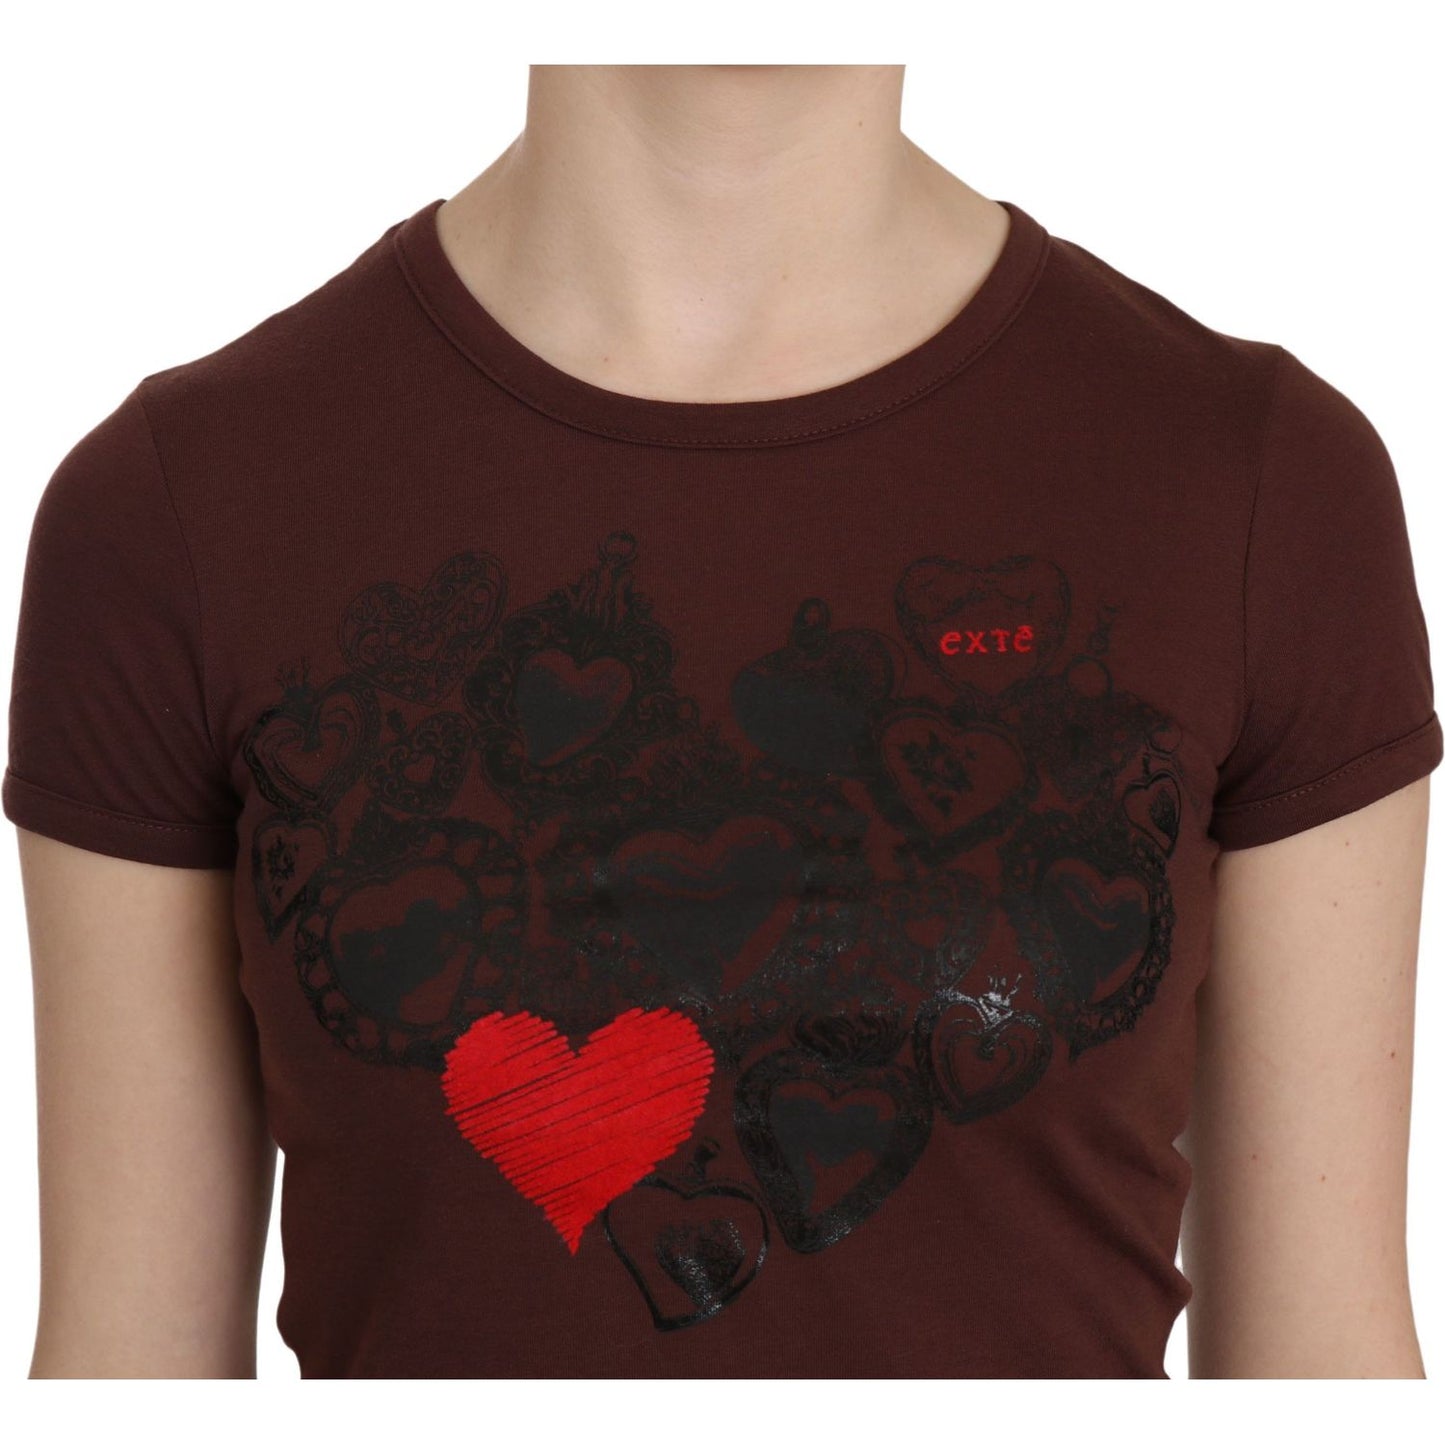 Exte Chic Brown Heart Print Crew Neck Top brown-heart-print-crew-neck-t-shirt-short-sleeve-blouse